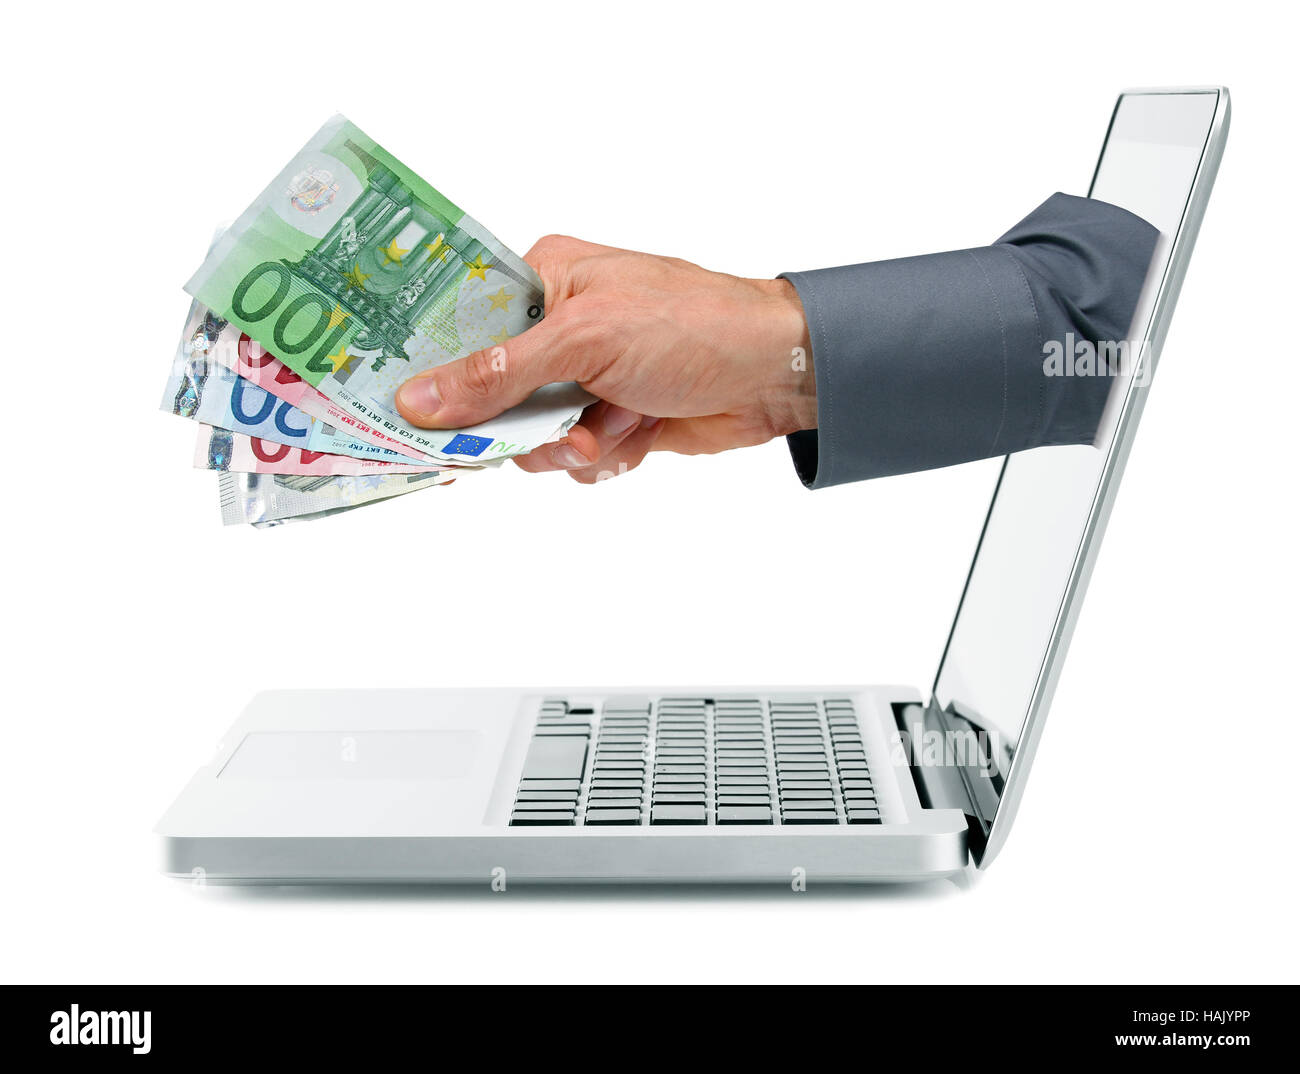 Recettes d'internet concept - la main avec de l'argent qui sort de l'écran de l'ordinateur portable Banque D'Images